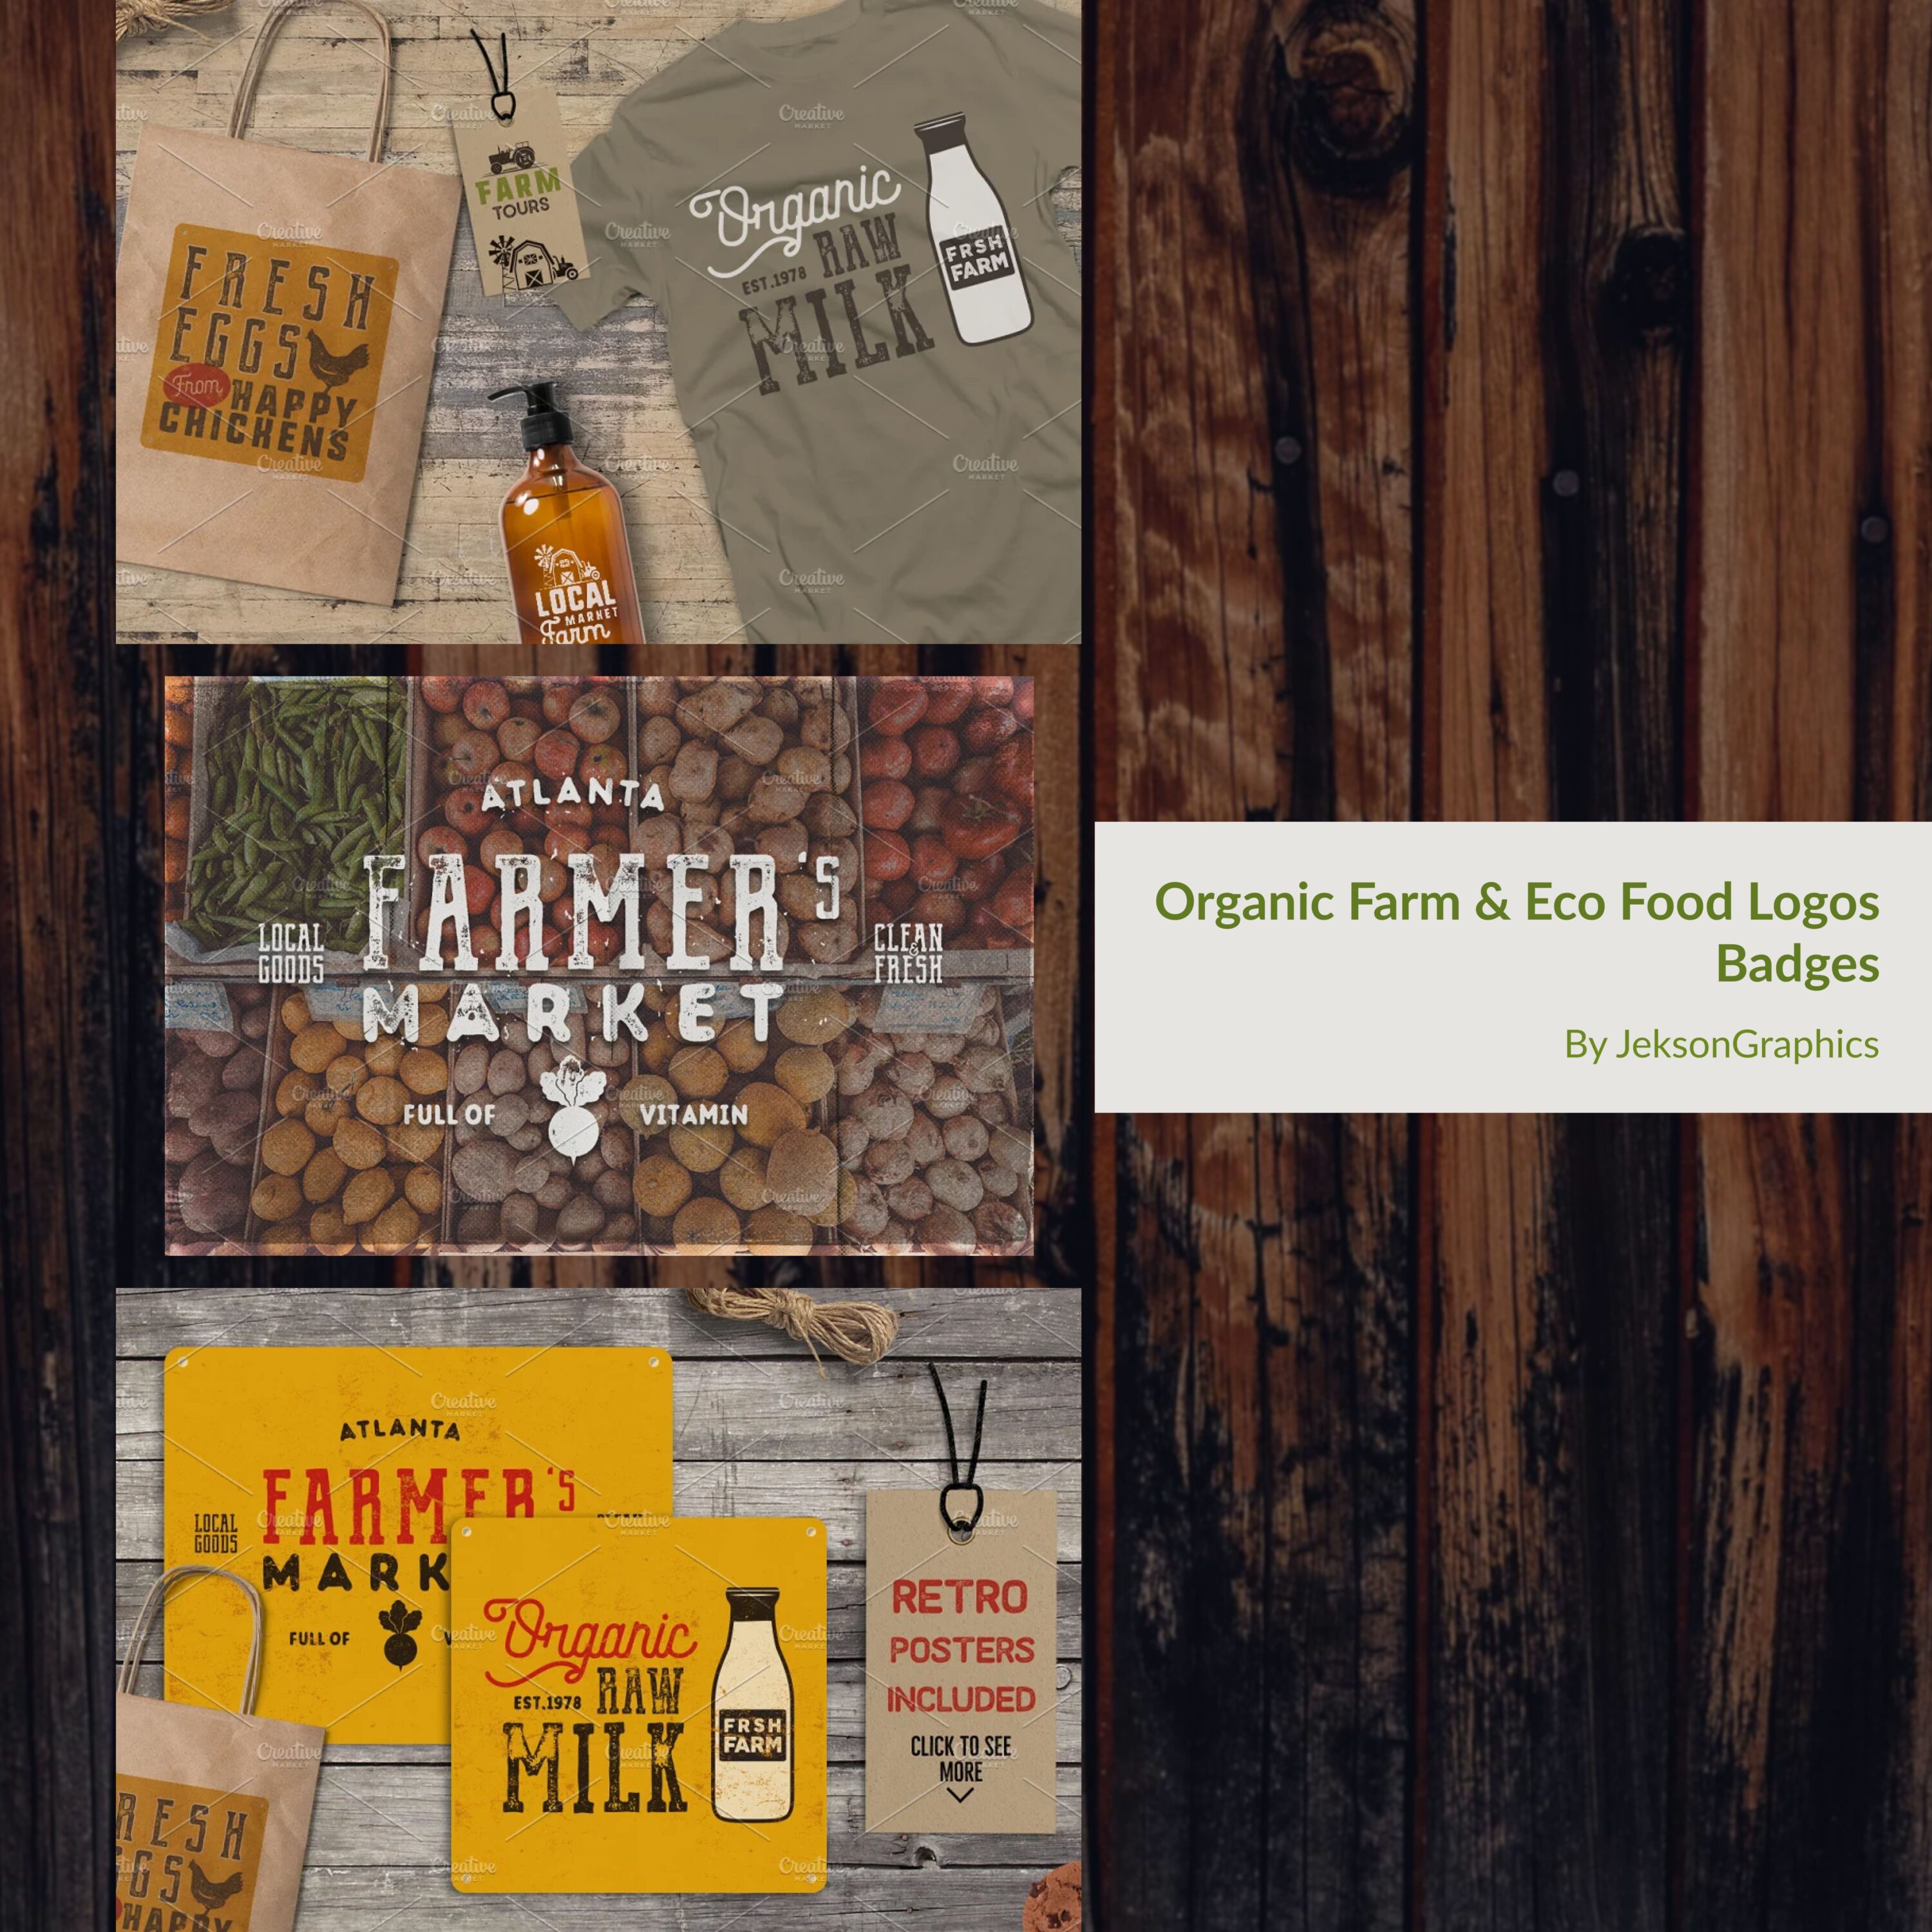 Organic Farm & Eco Food Logos Badges cover.